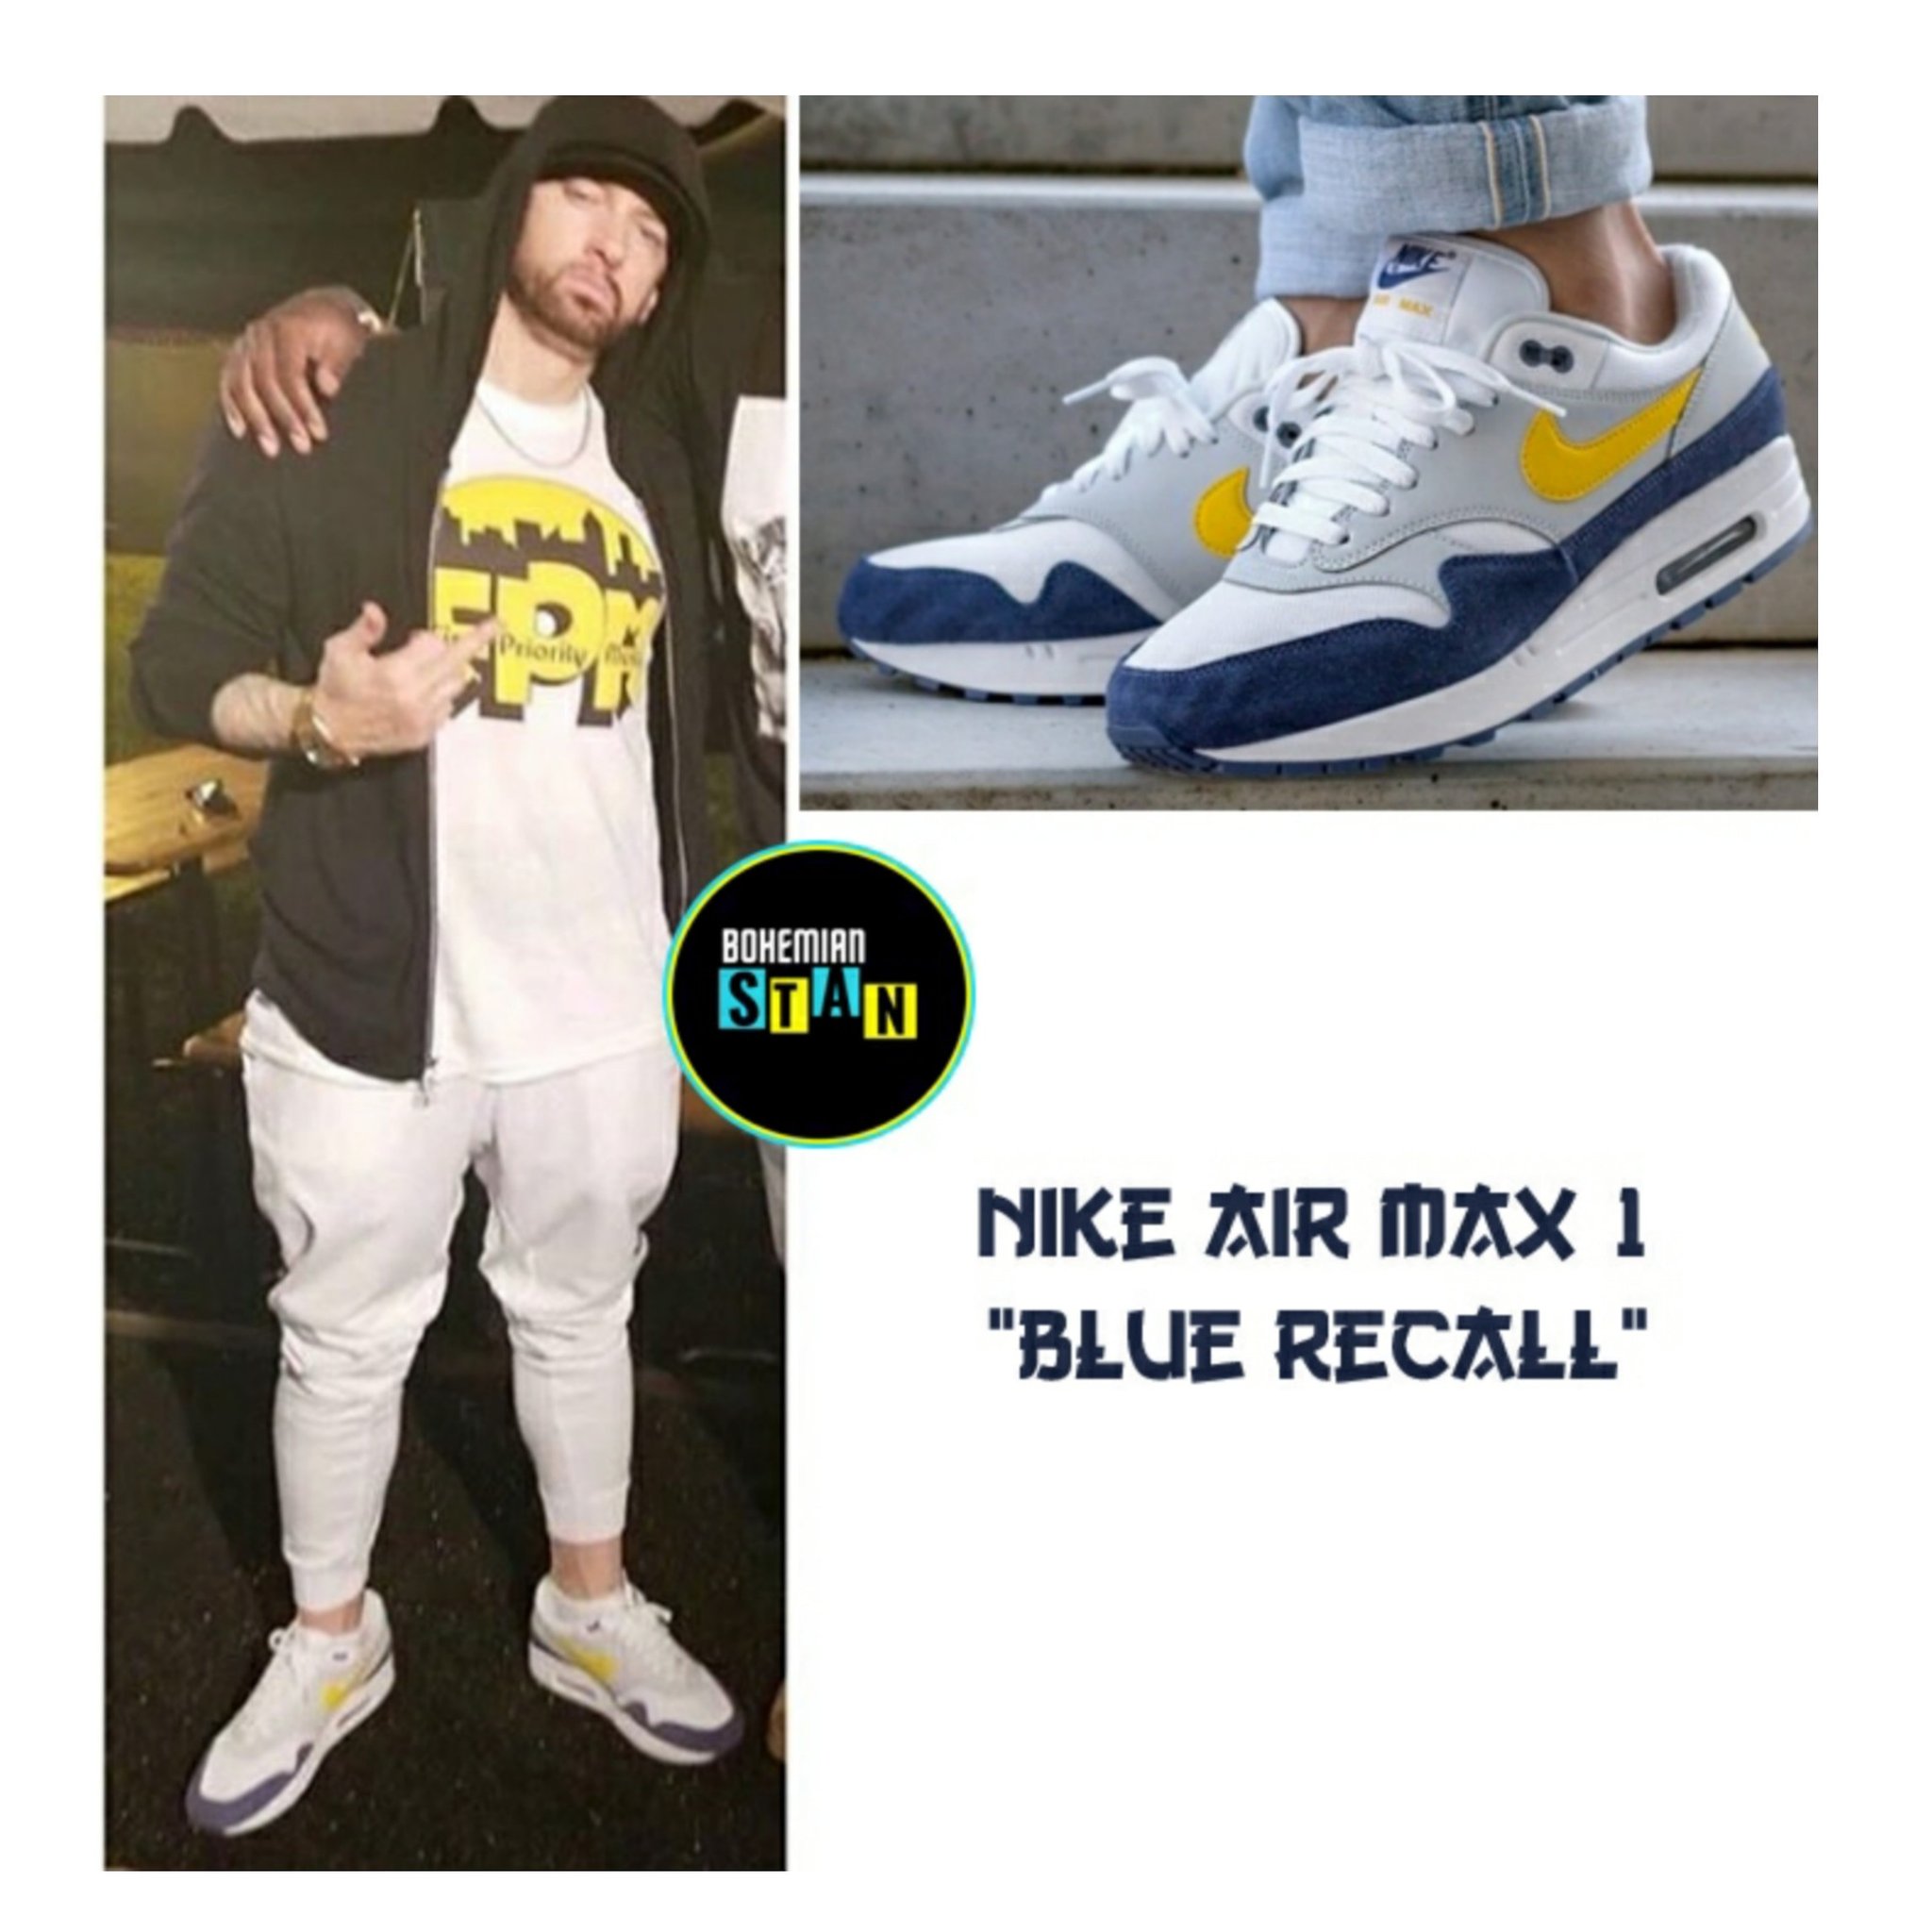 Bohemian STAN on X: 7. #FromEminemsWardrobe @eminem wearing here Nike Air  Max 1 Blue Recall Price in India- INR 12,200 . . . #Sneaker #Eminem #nike  #airmax #airmax1 #bluerecall #black #yellow #white #